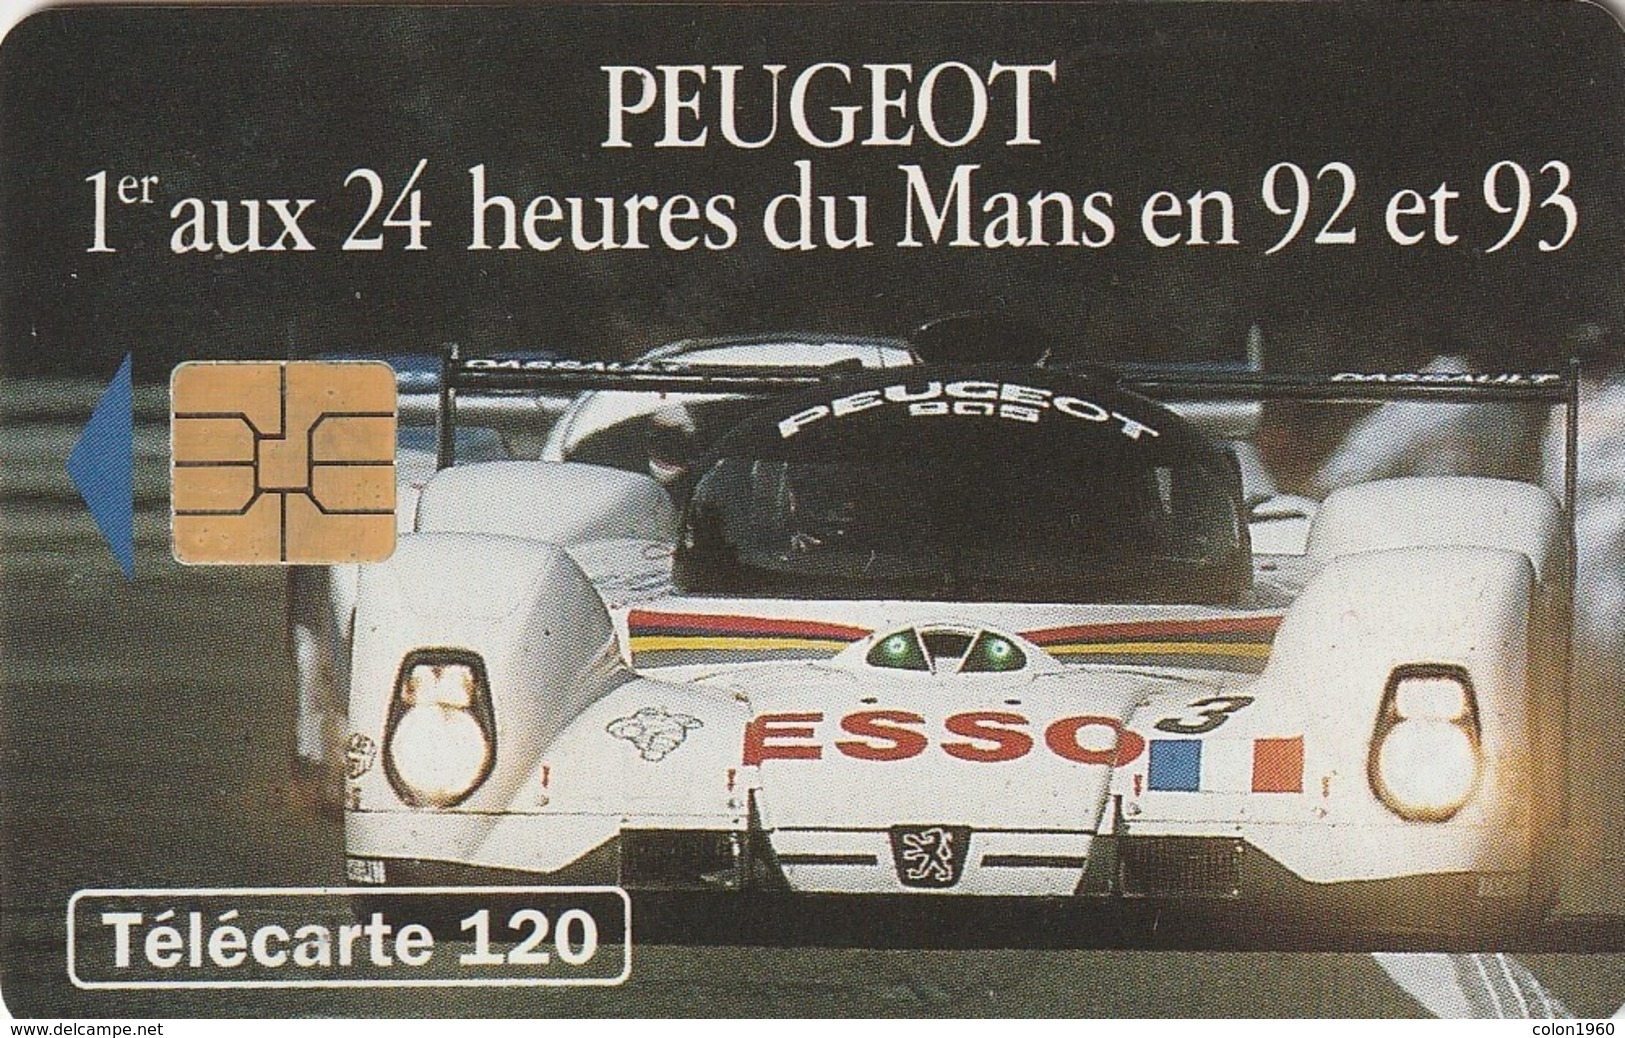 FRANCIA. Peugeot 905 6 - Voiture De Face. 120U. 0404. 07/93. (201). - Deportes